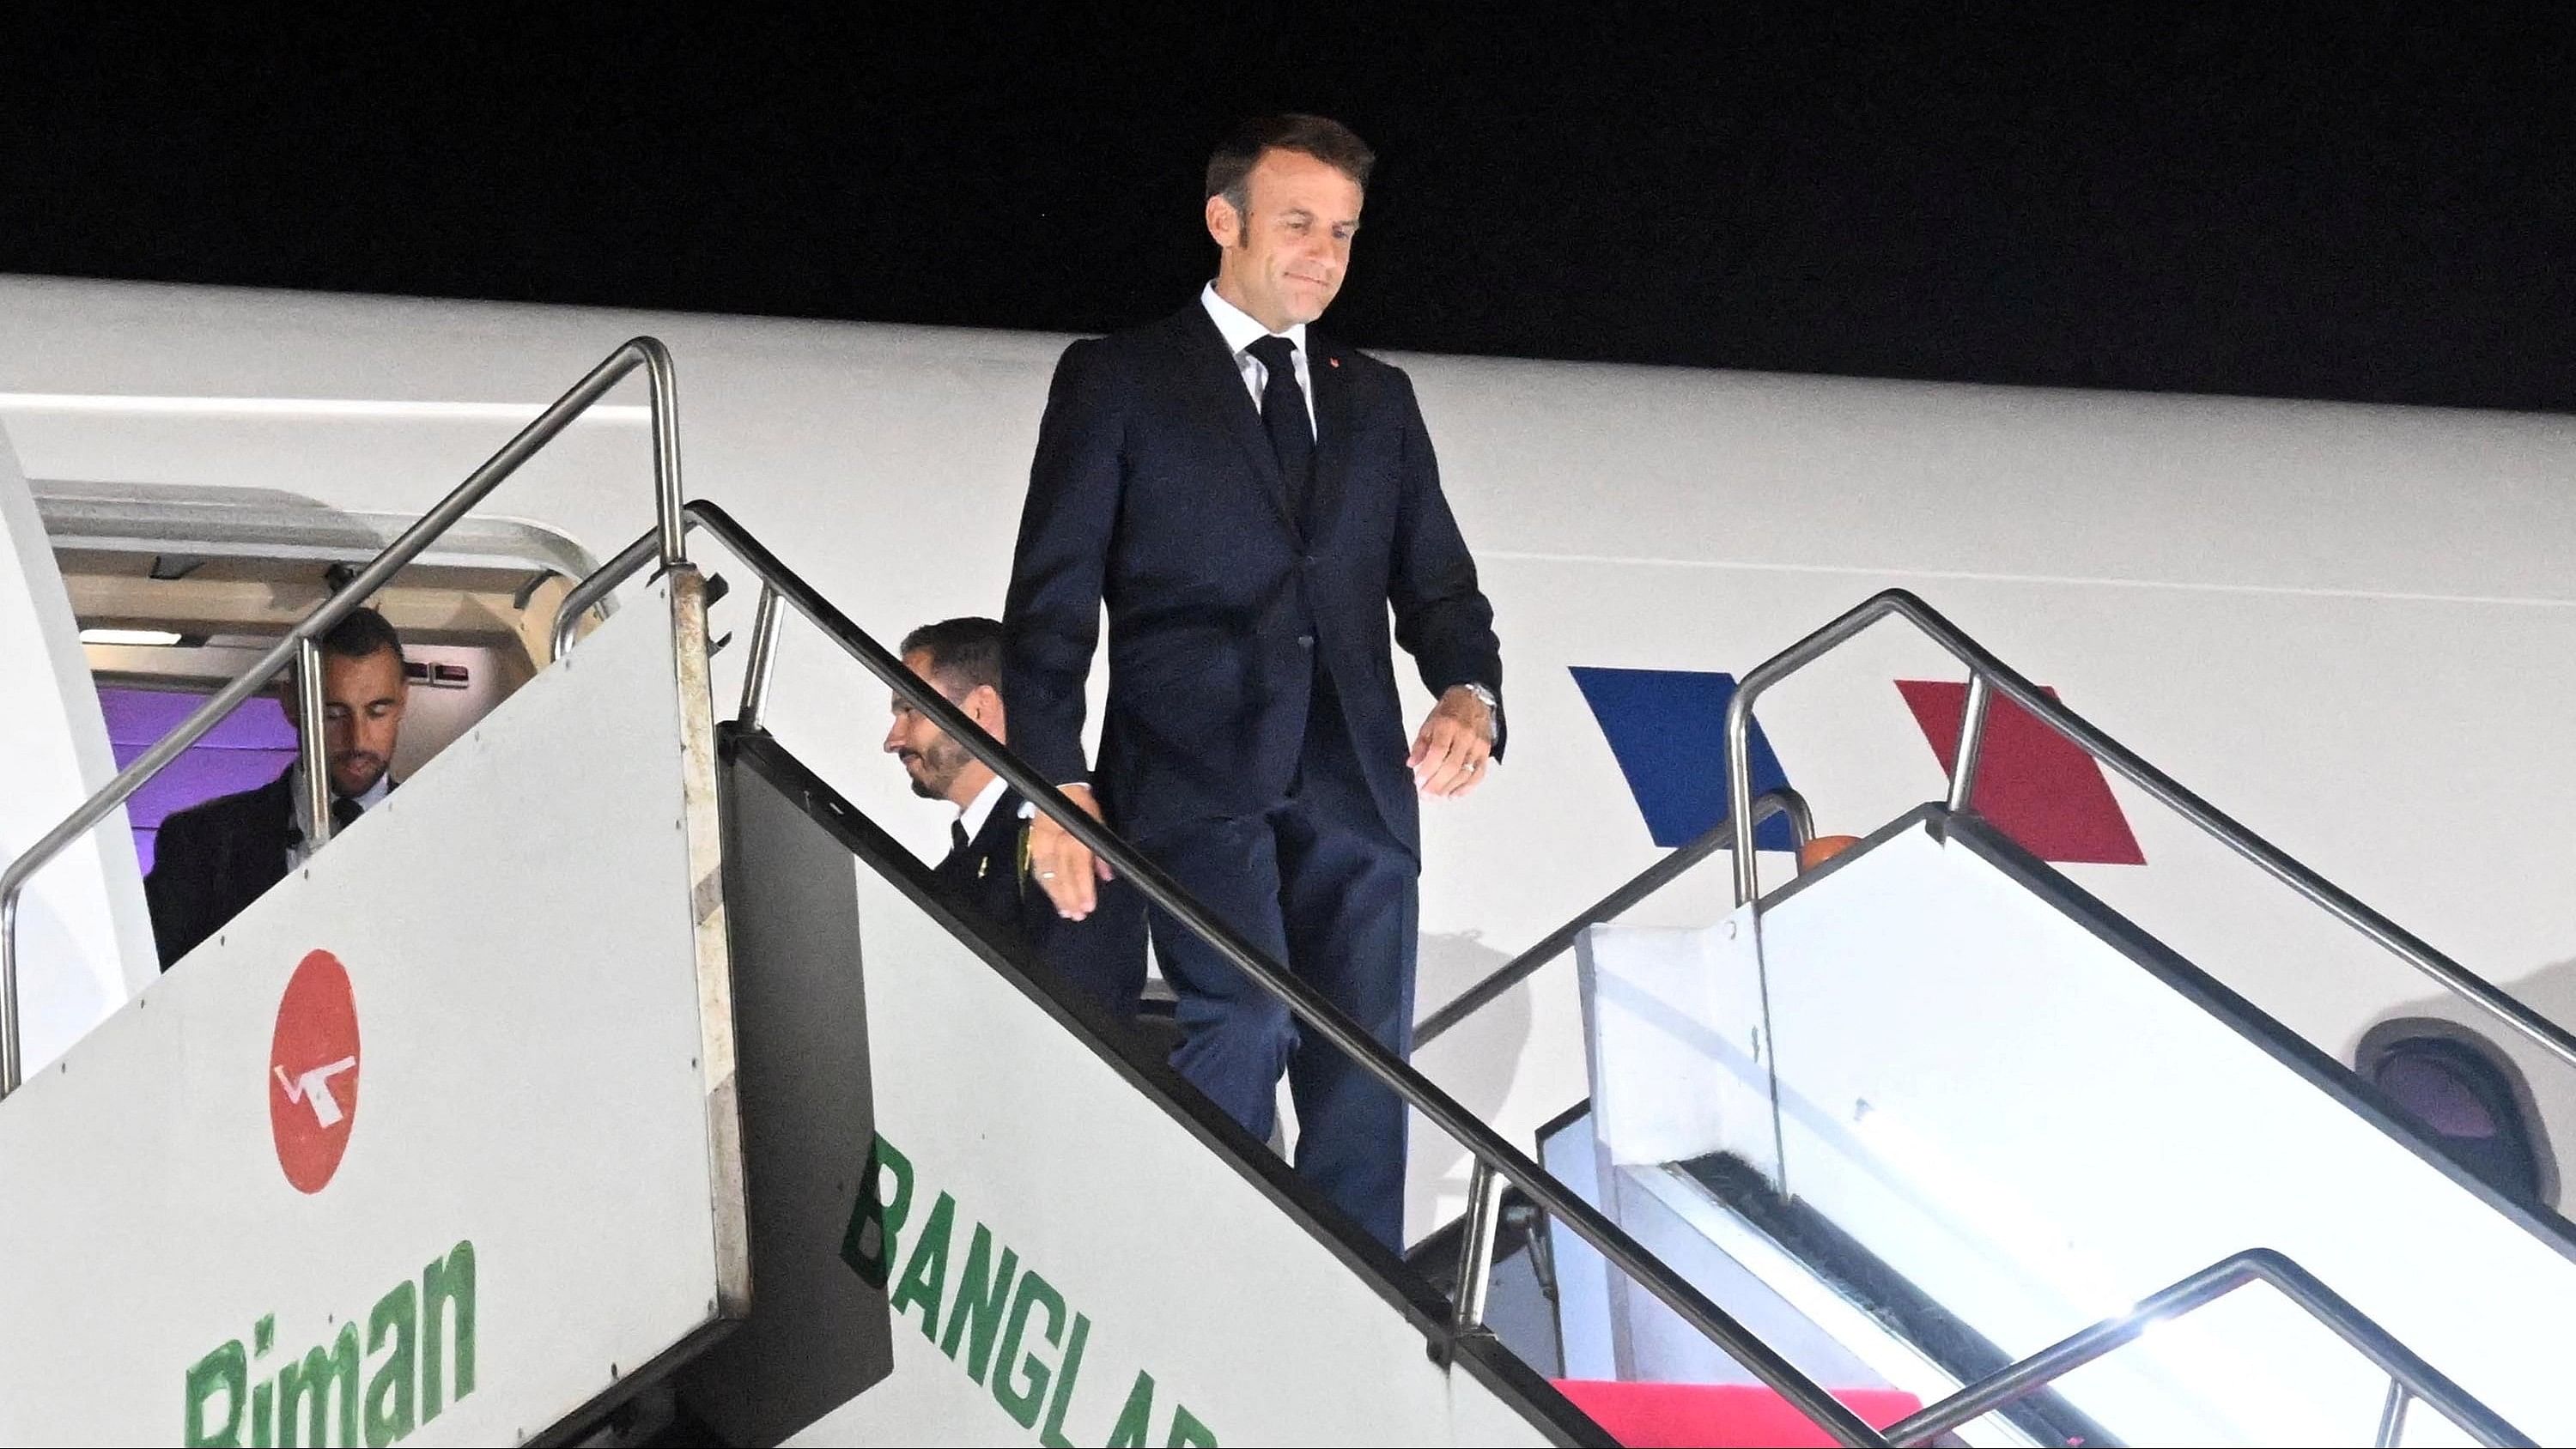 <div class="paragraphs"><p>French President Emmanuel Macron arrives at the Hazrat Shahjalal International Airport in Dhaka, Bangladesh.</p></div>